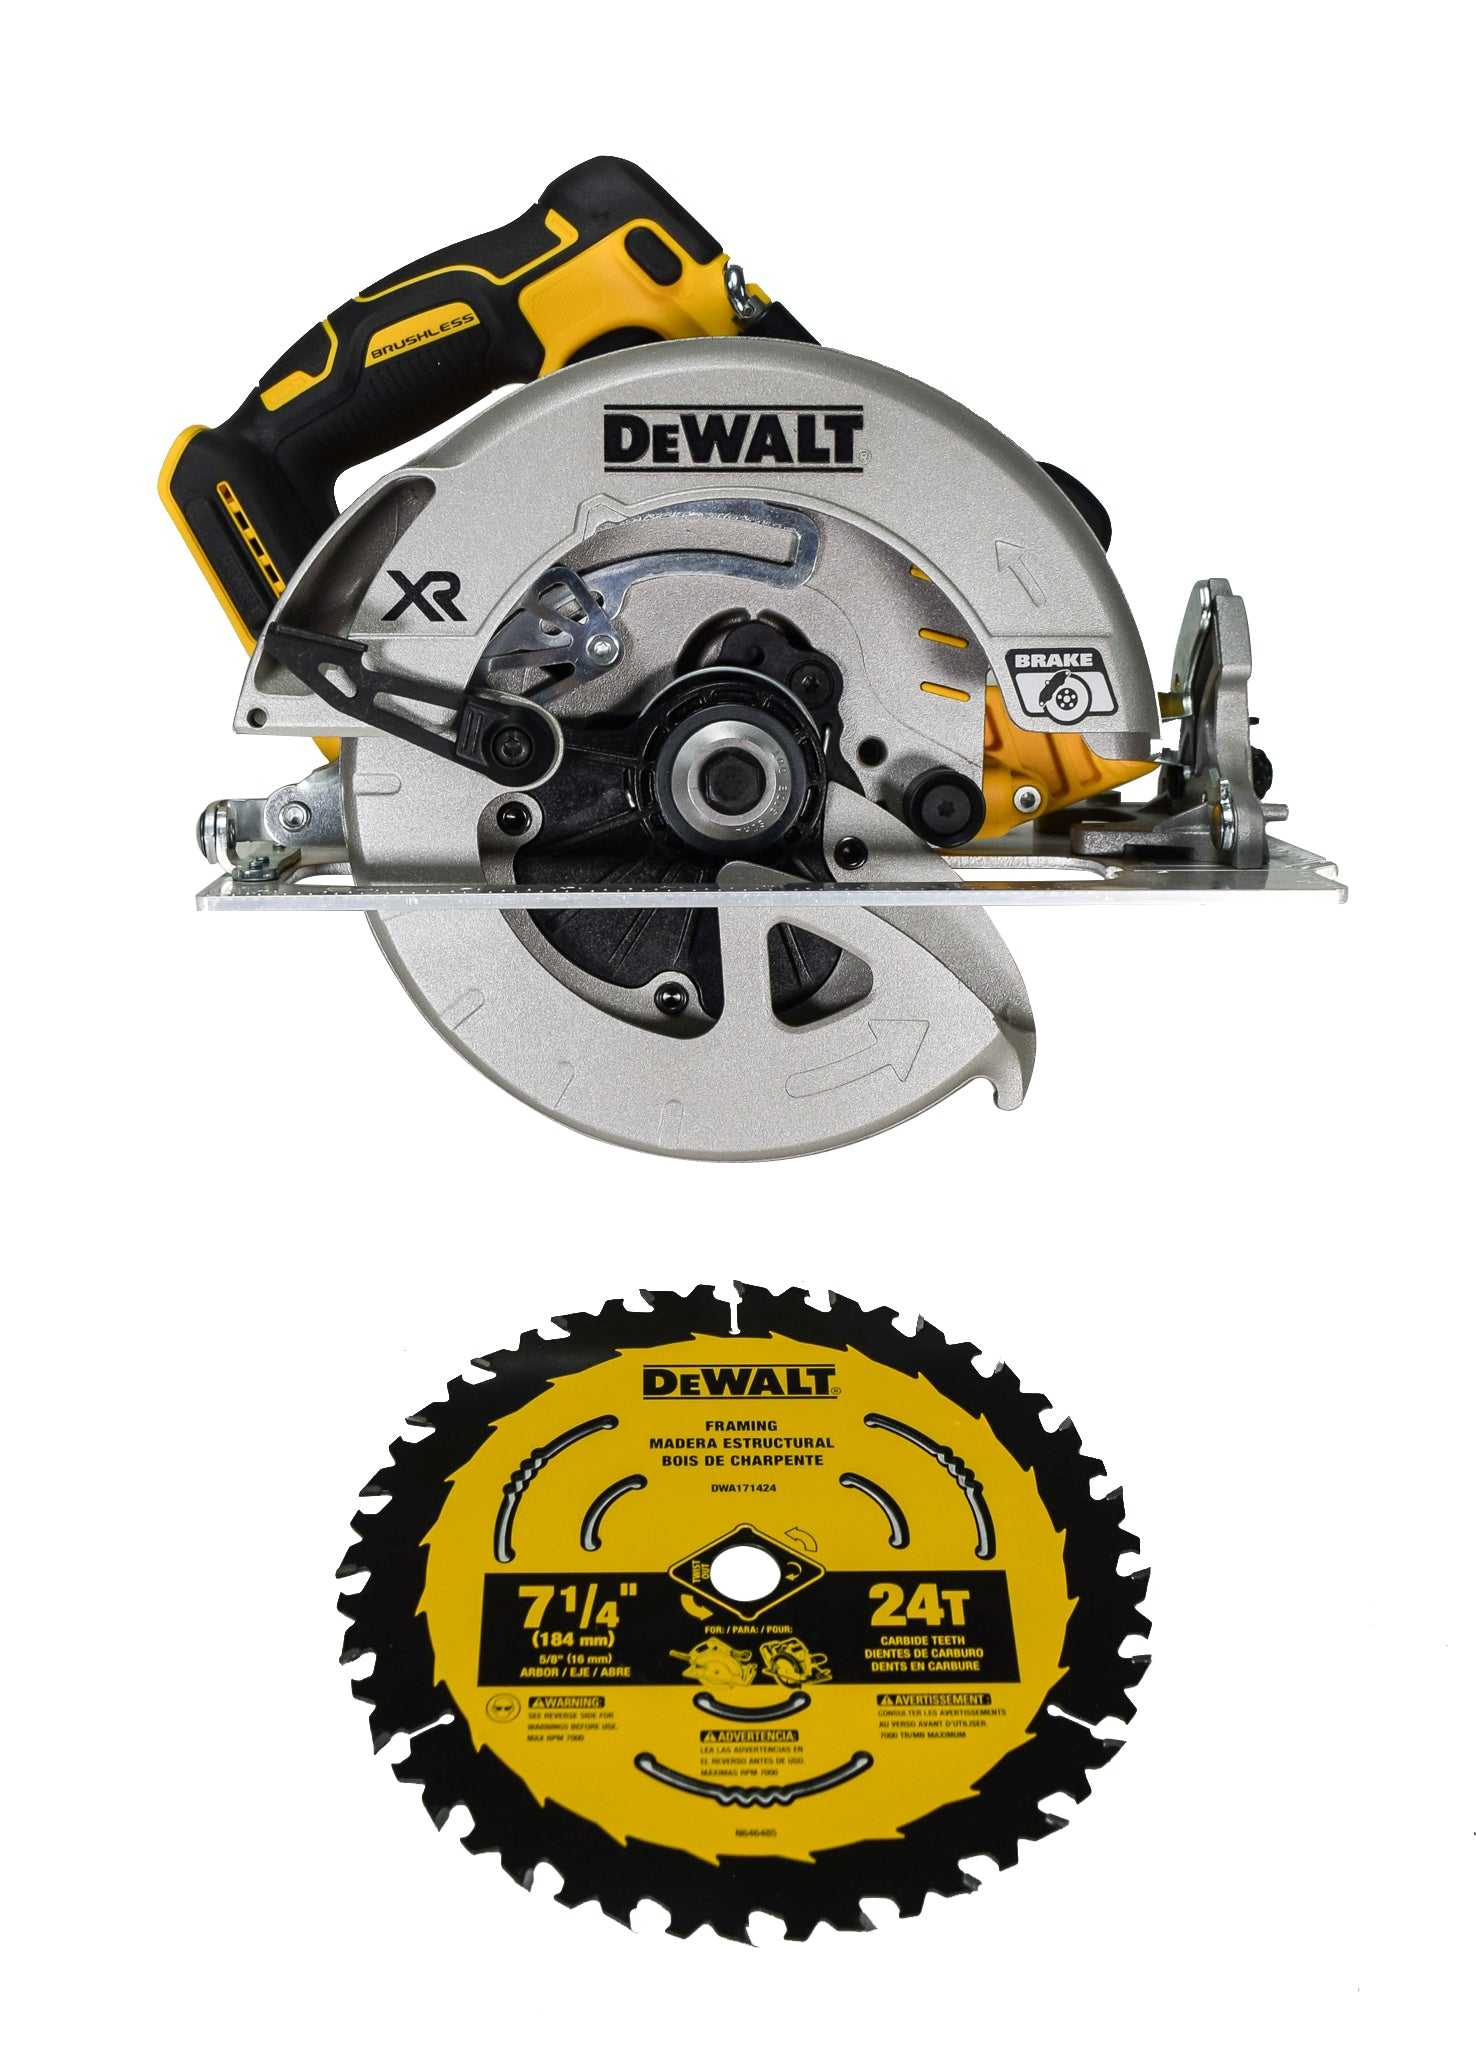 Dewalt, Dewalt DCS574B 20V MAX XR Brushless 7-1/4" Cordless Circular Saw (Bare Tool)